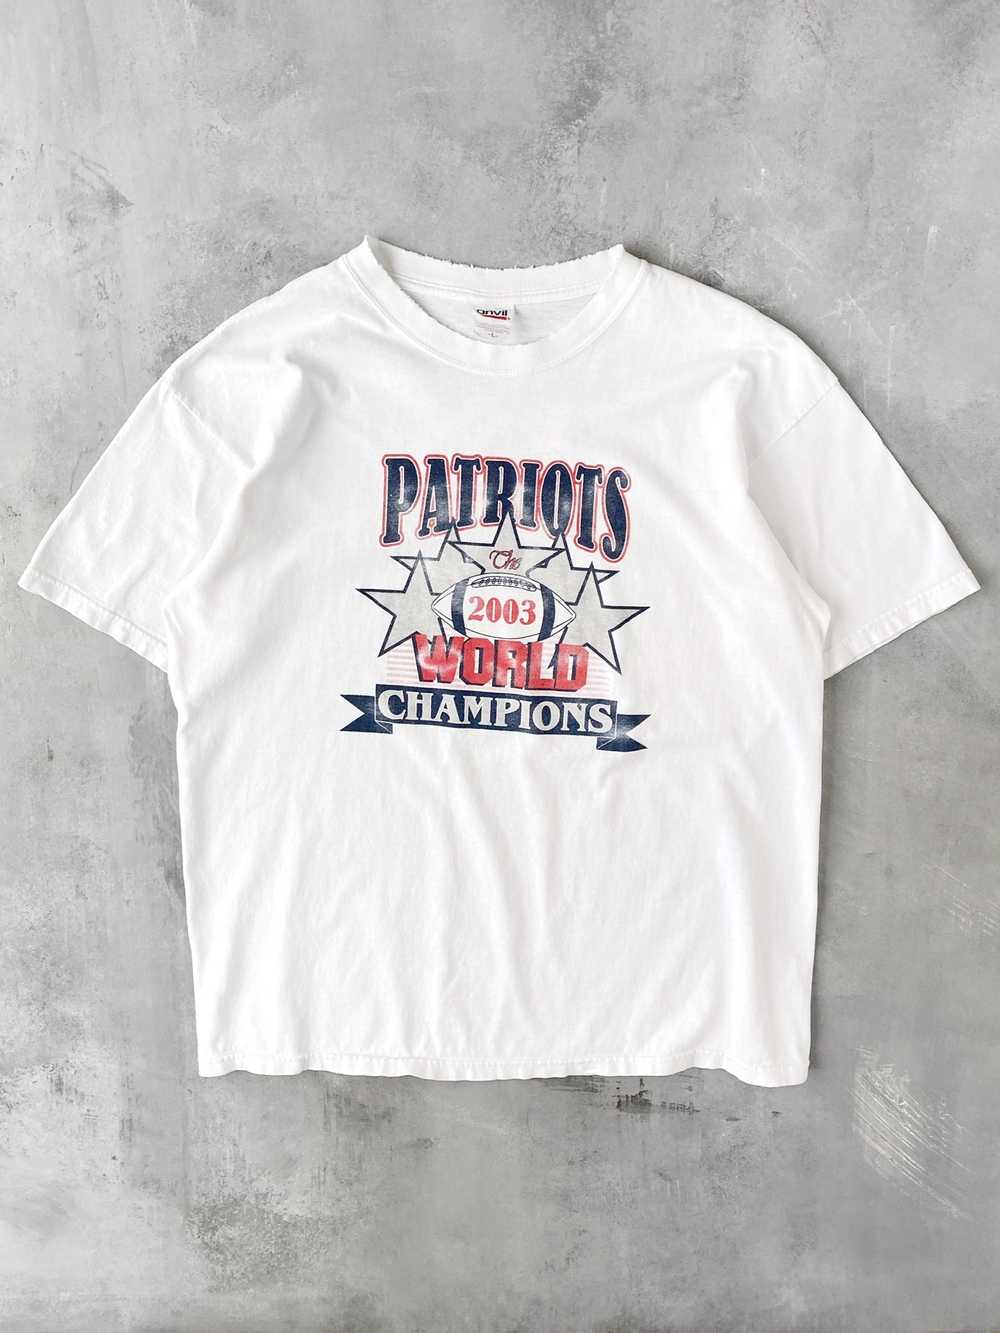 New England Patriots T-Shirt '03 - Large - image 1